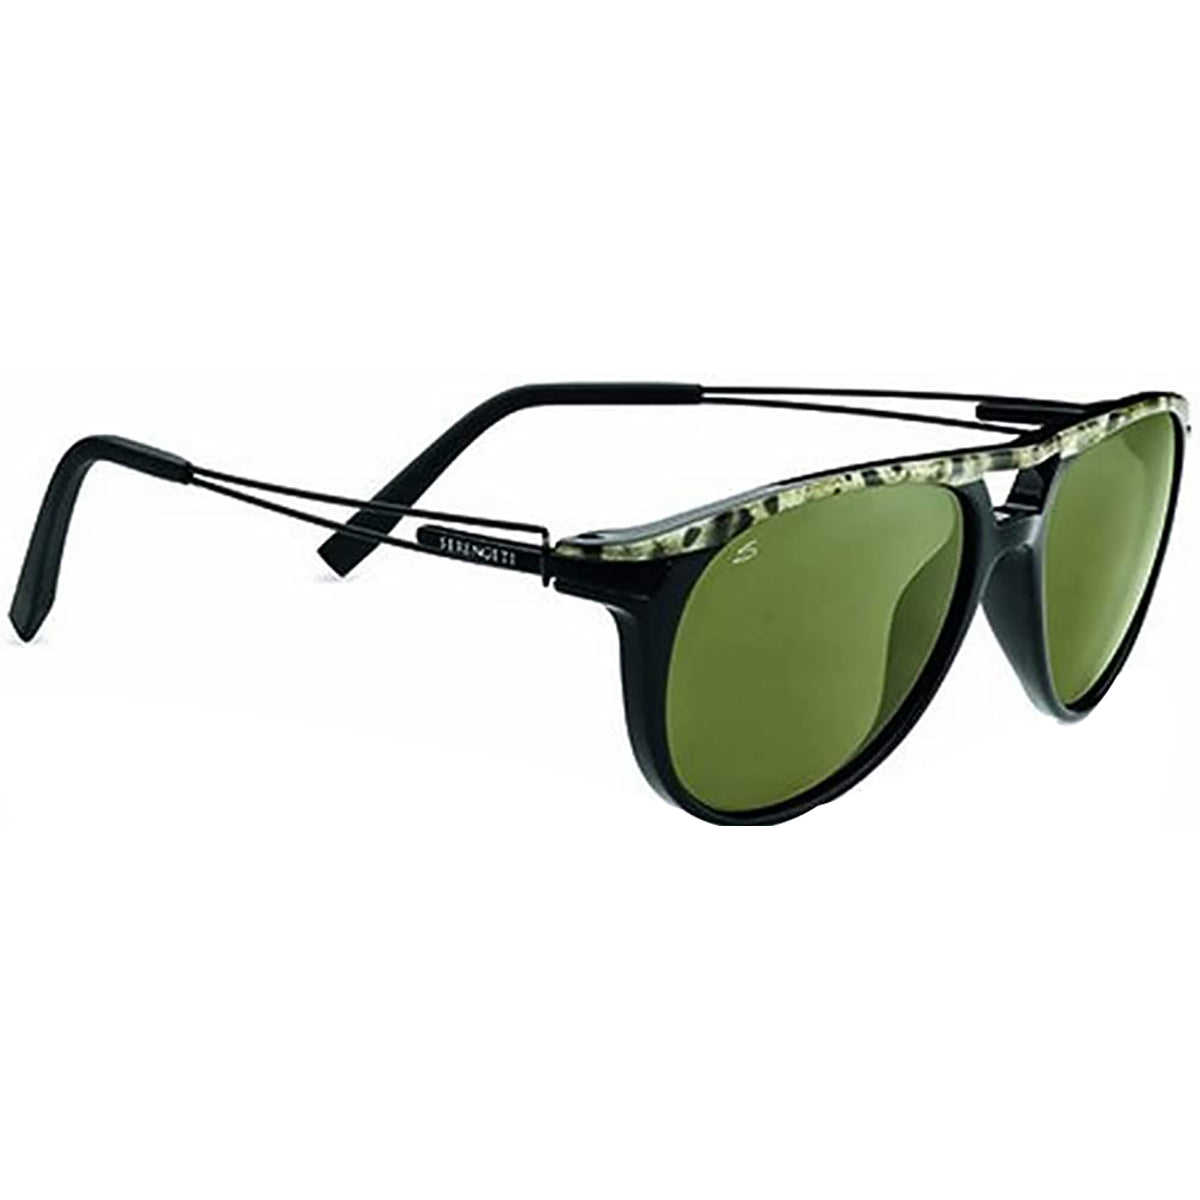 BKE Mirror Aviator Sunglasses - Women's Sunglasses & Glasses in